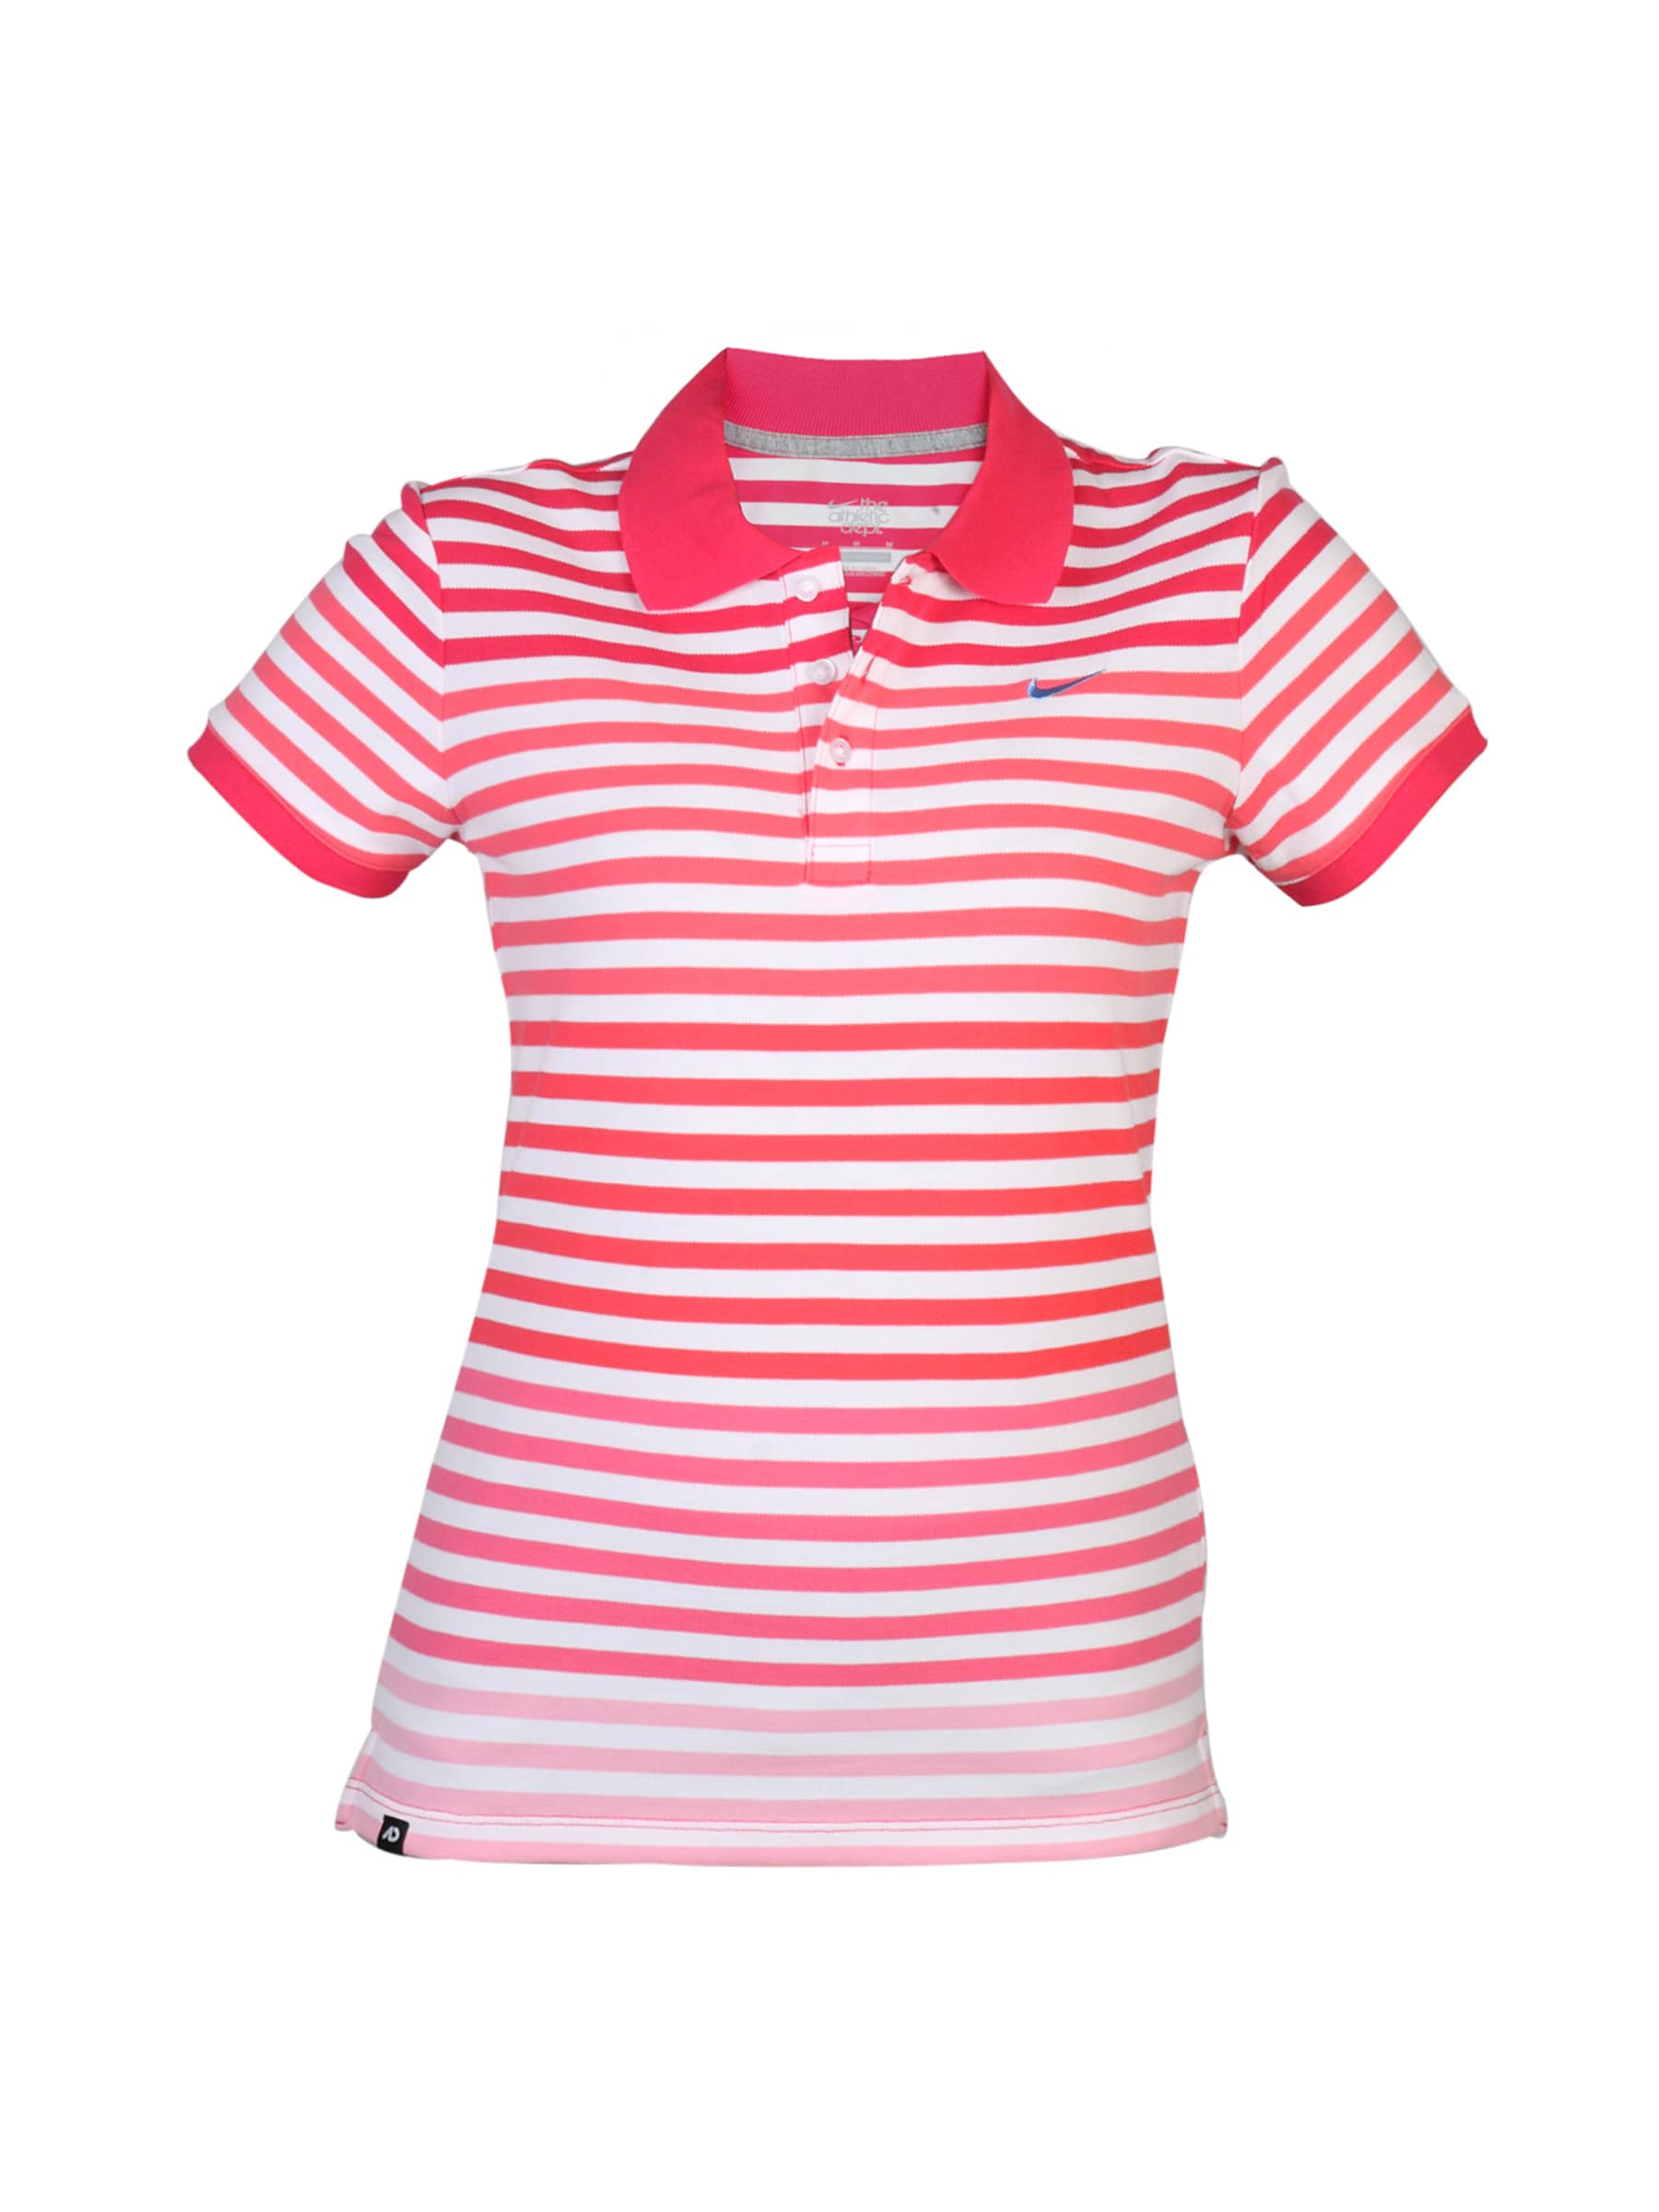 Nike Women Polo Pink Striped T-shirt